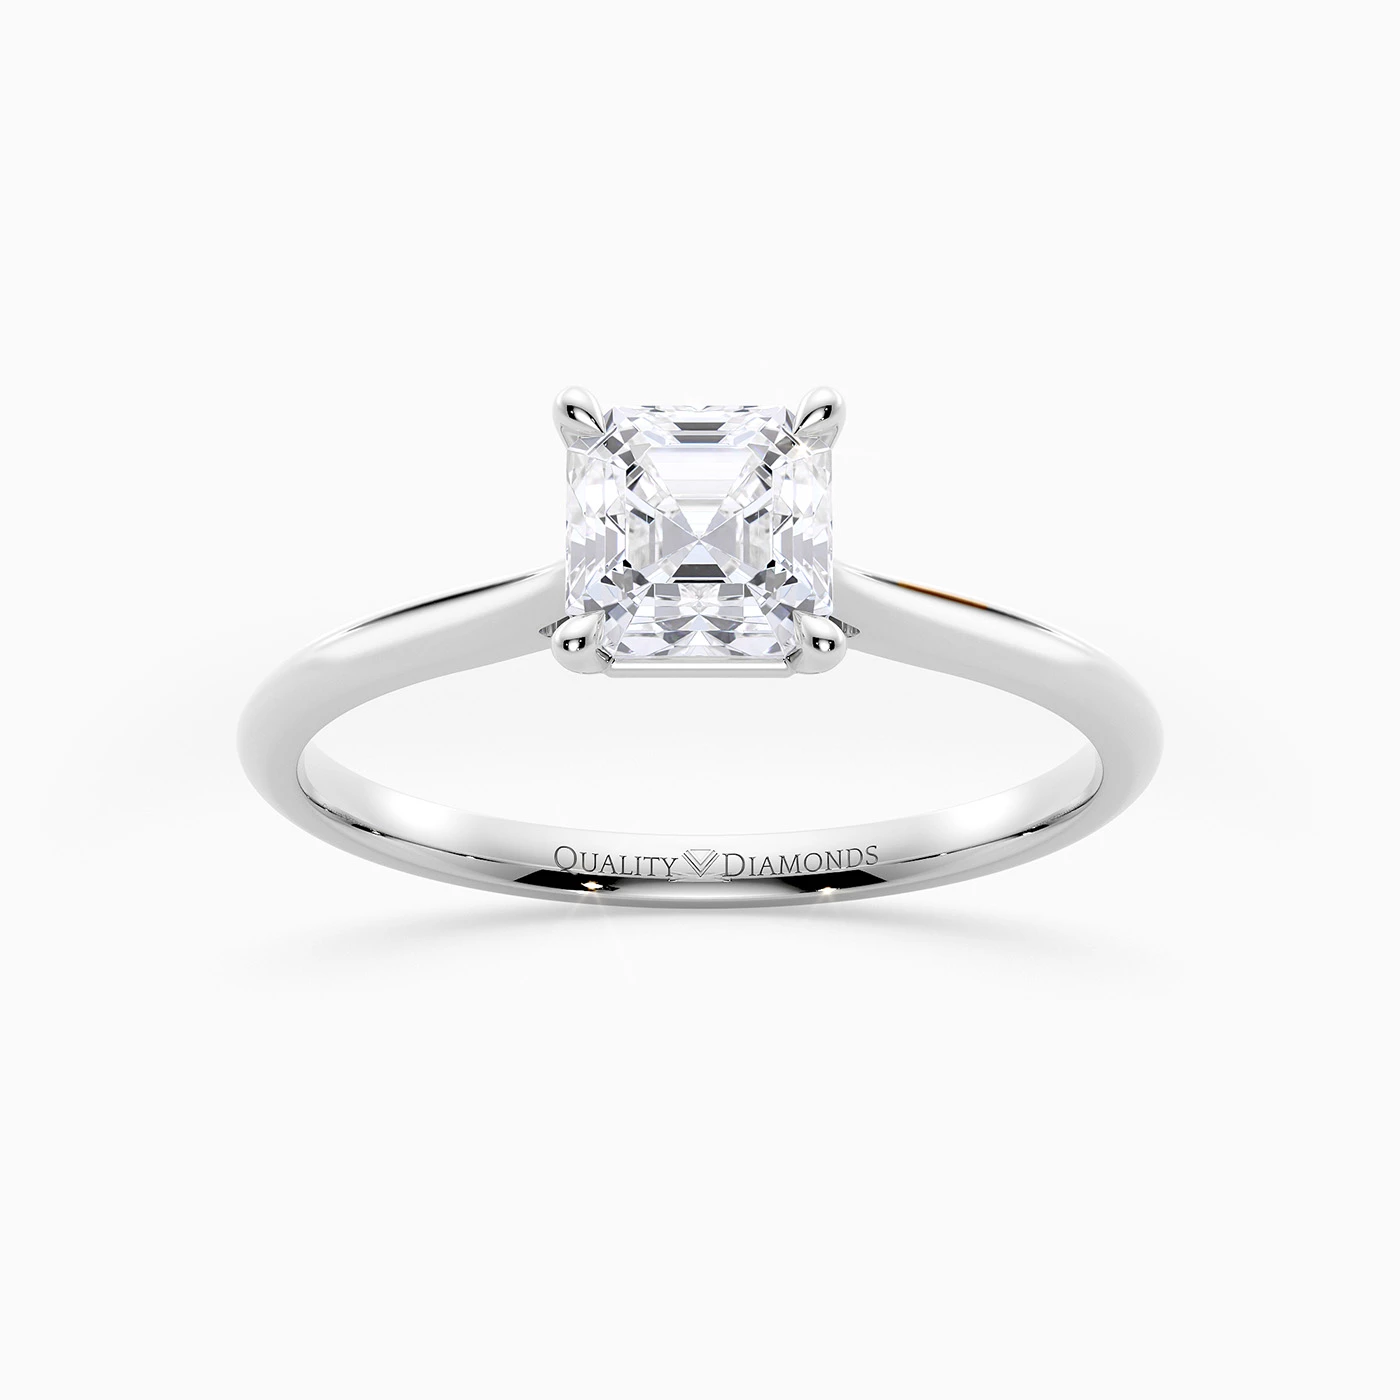 Asscher Carys Diamond Ring in Palladium